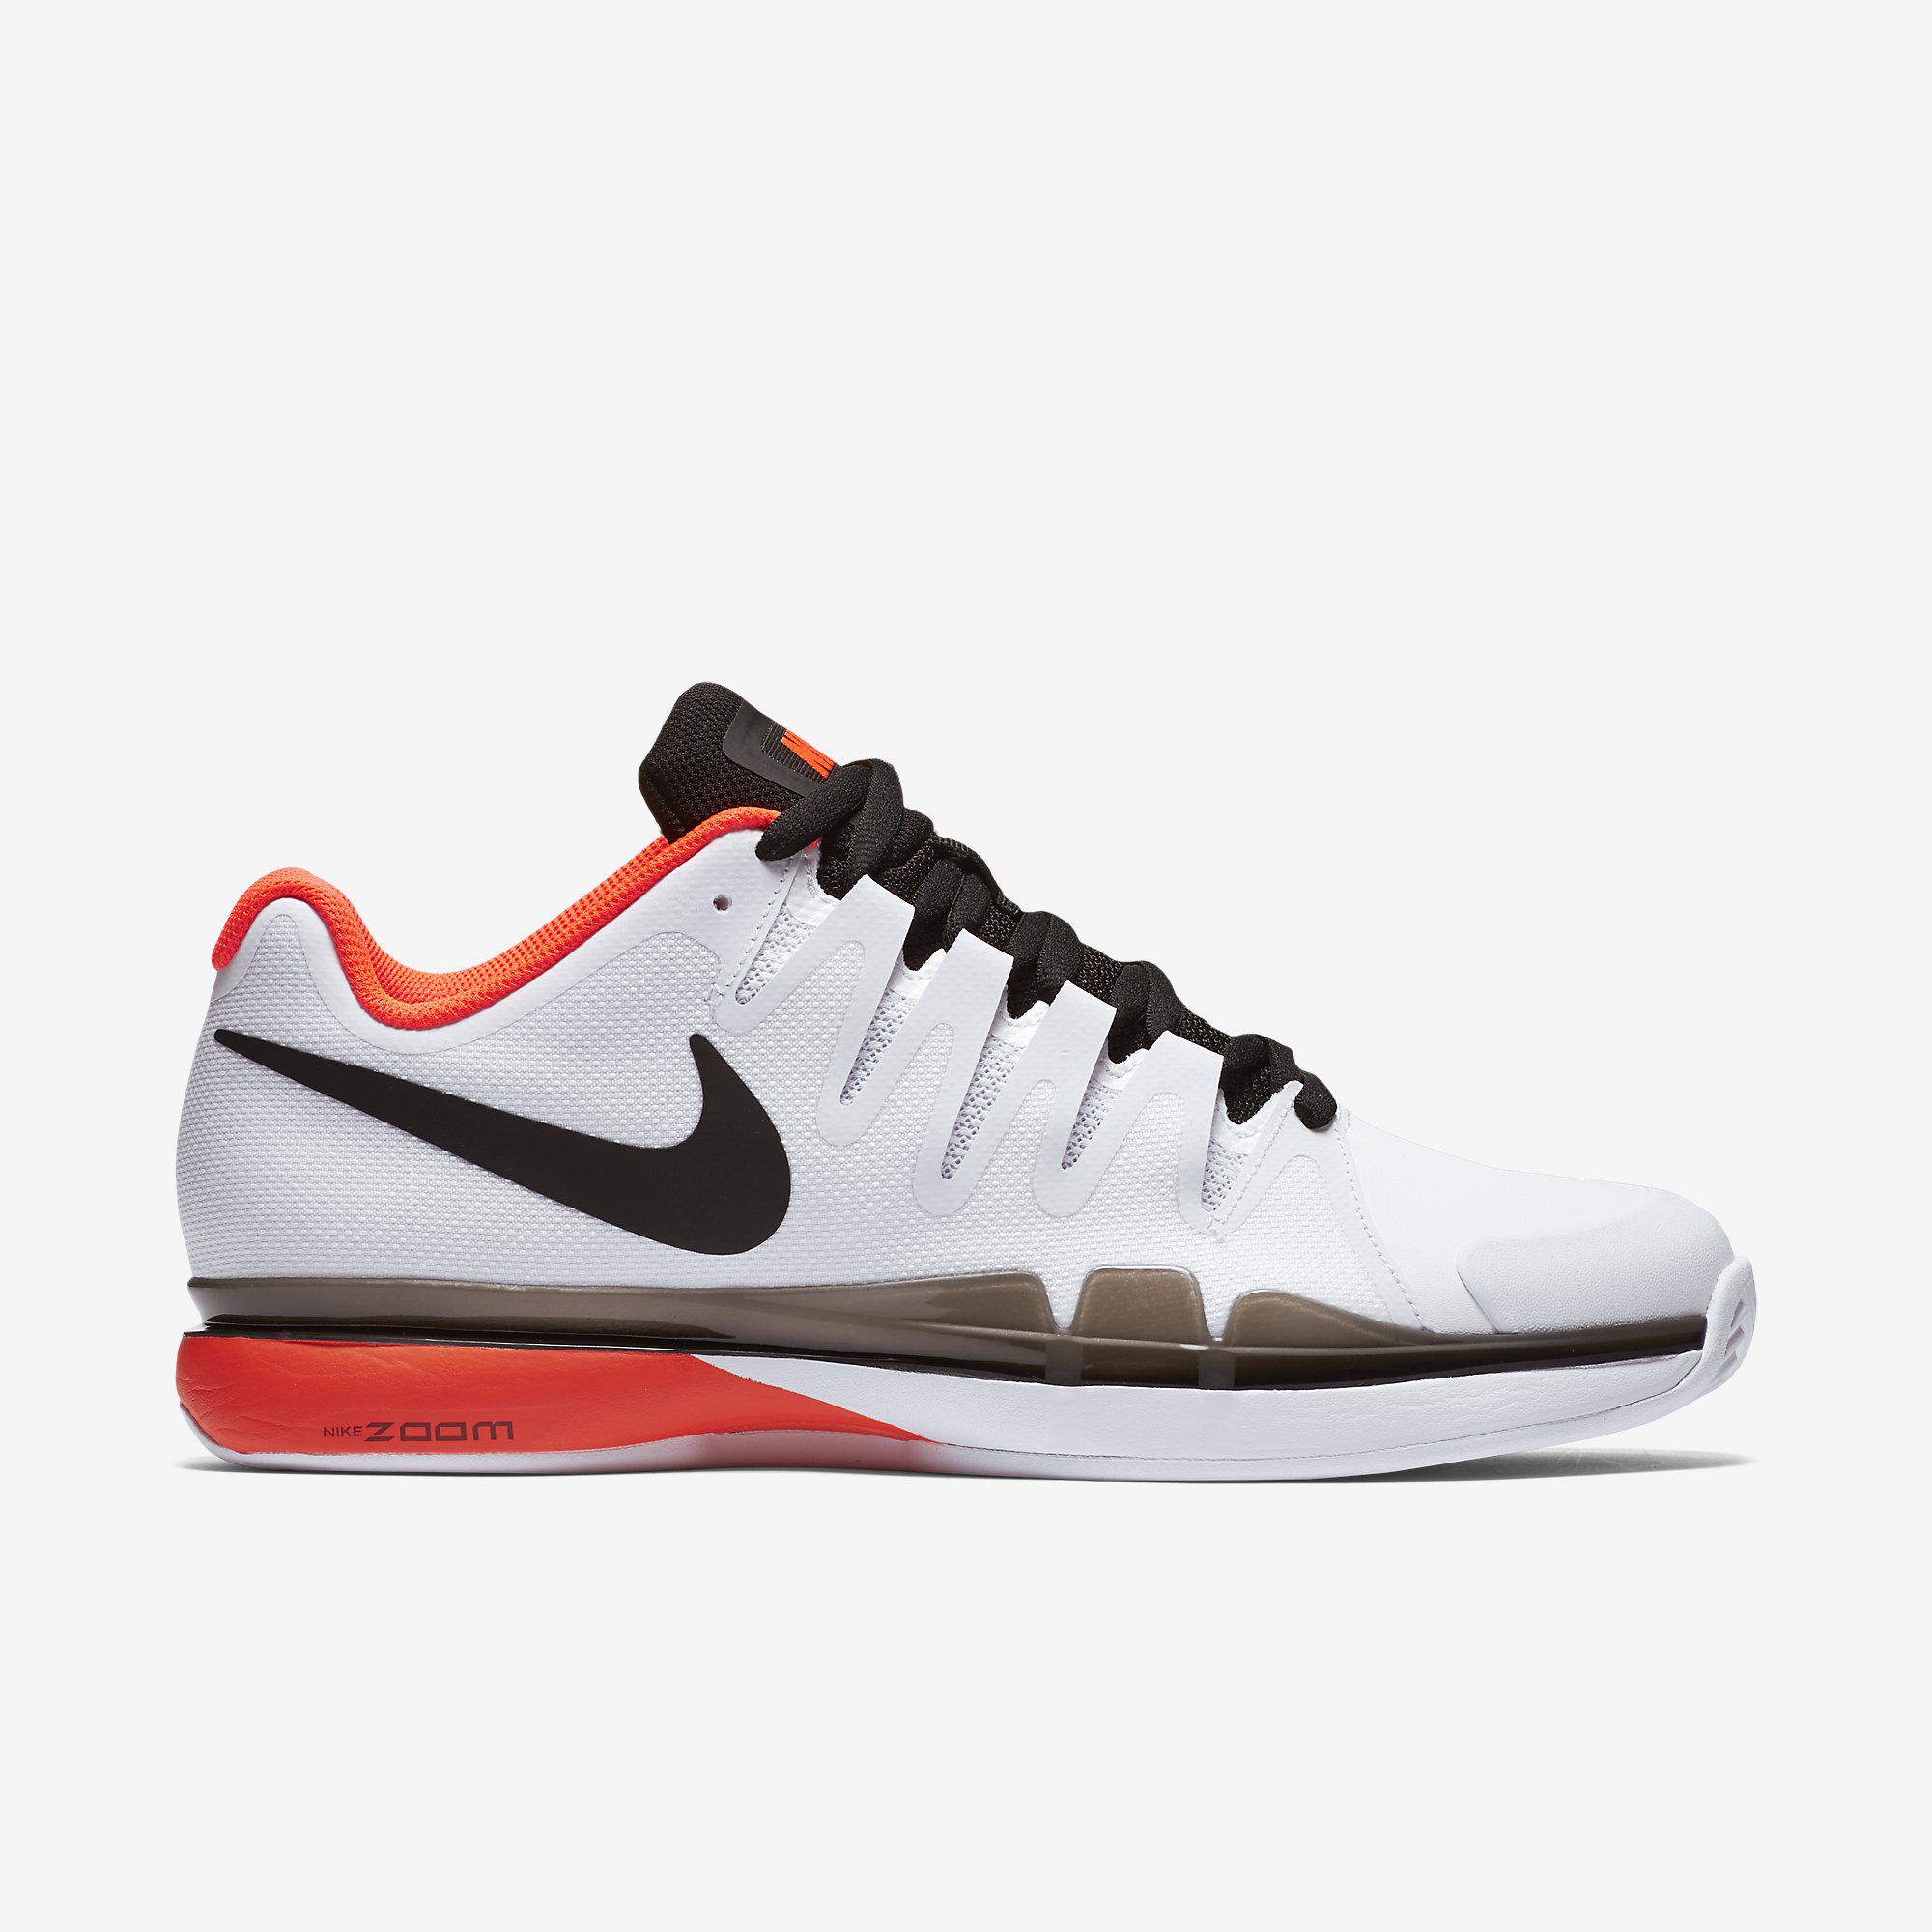 Nike Mens Vapor 9.5 Tour Court Tennis Shoes - White/Crimson Tennisnuts.com